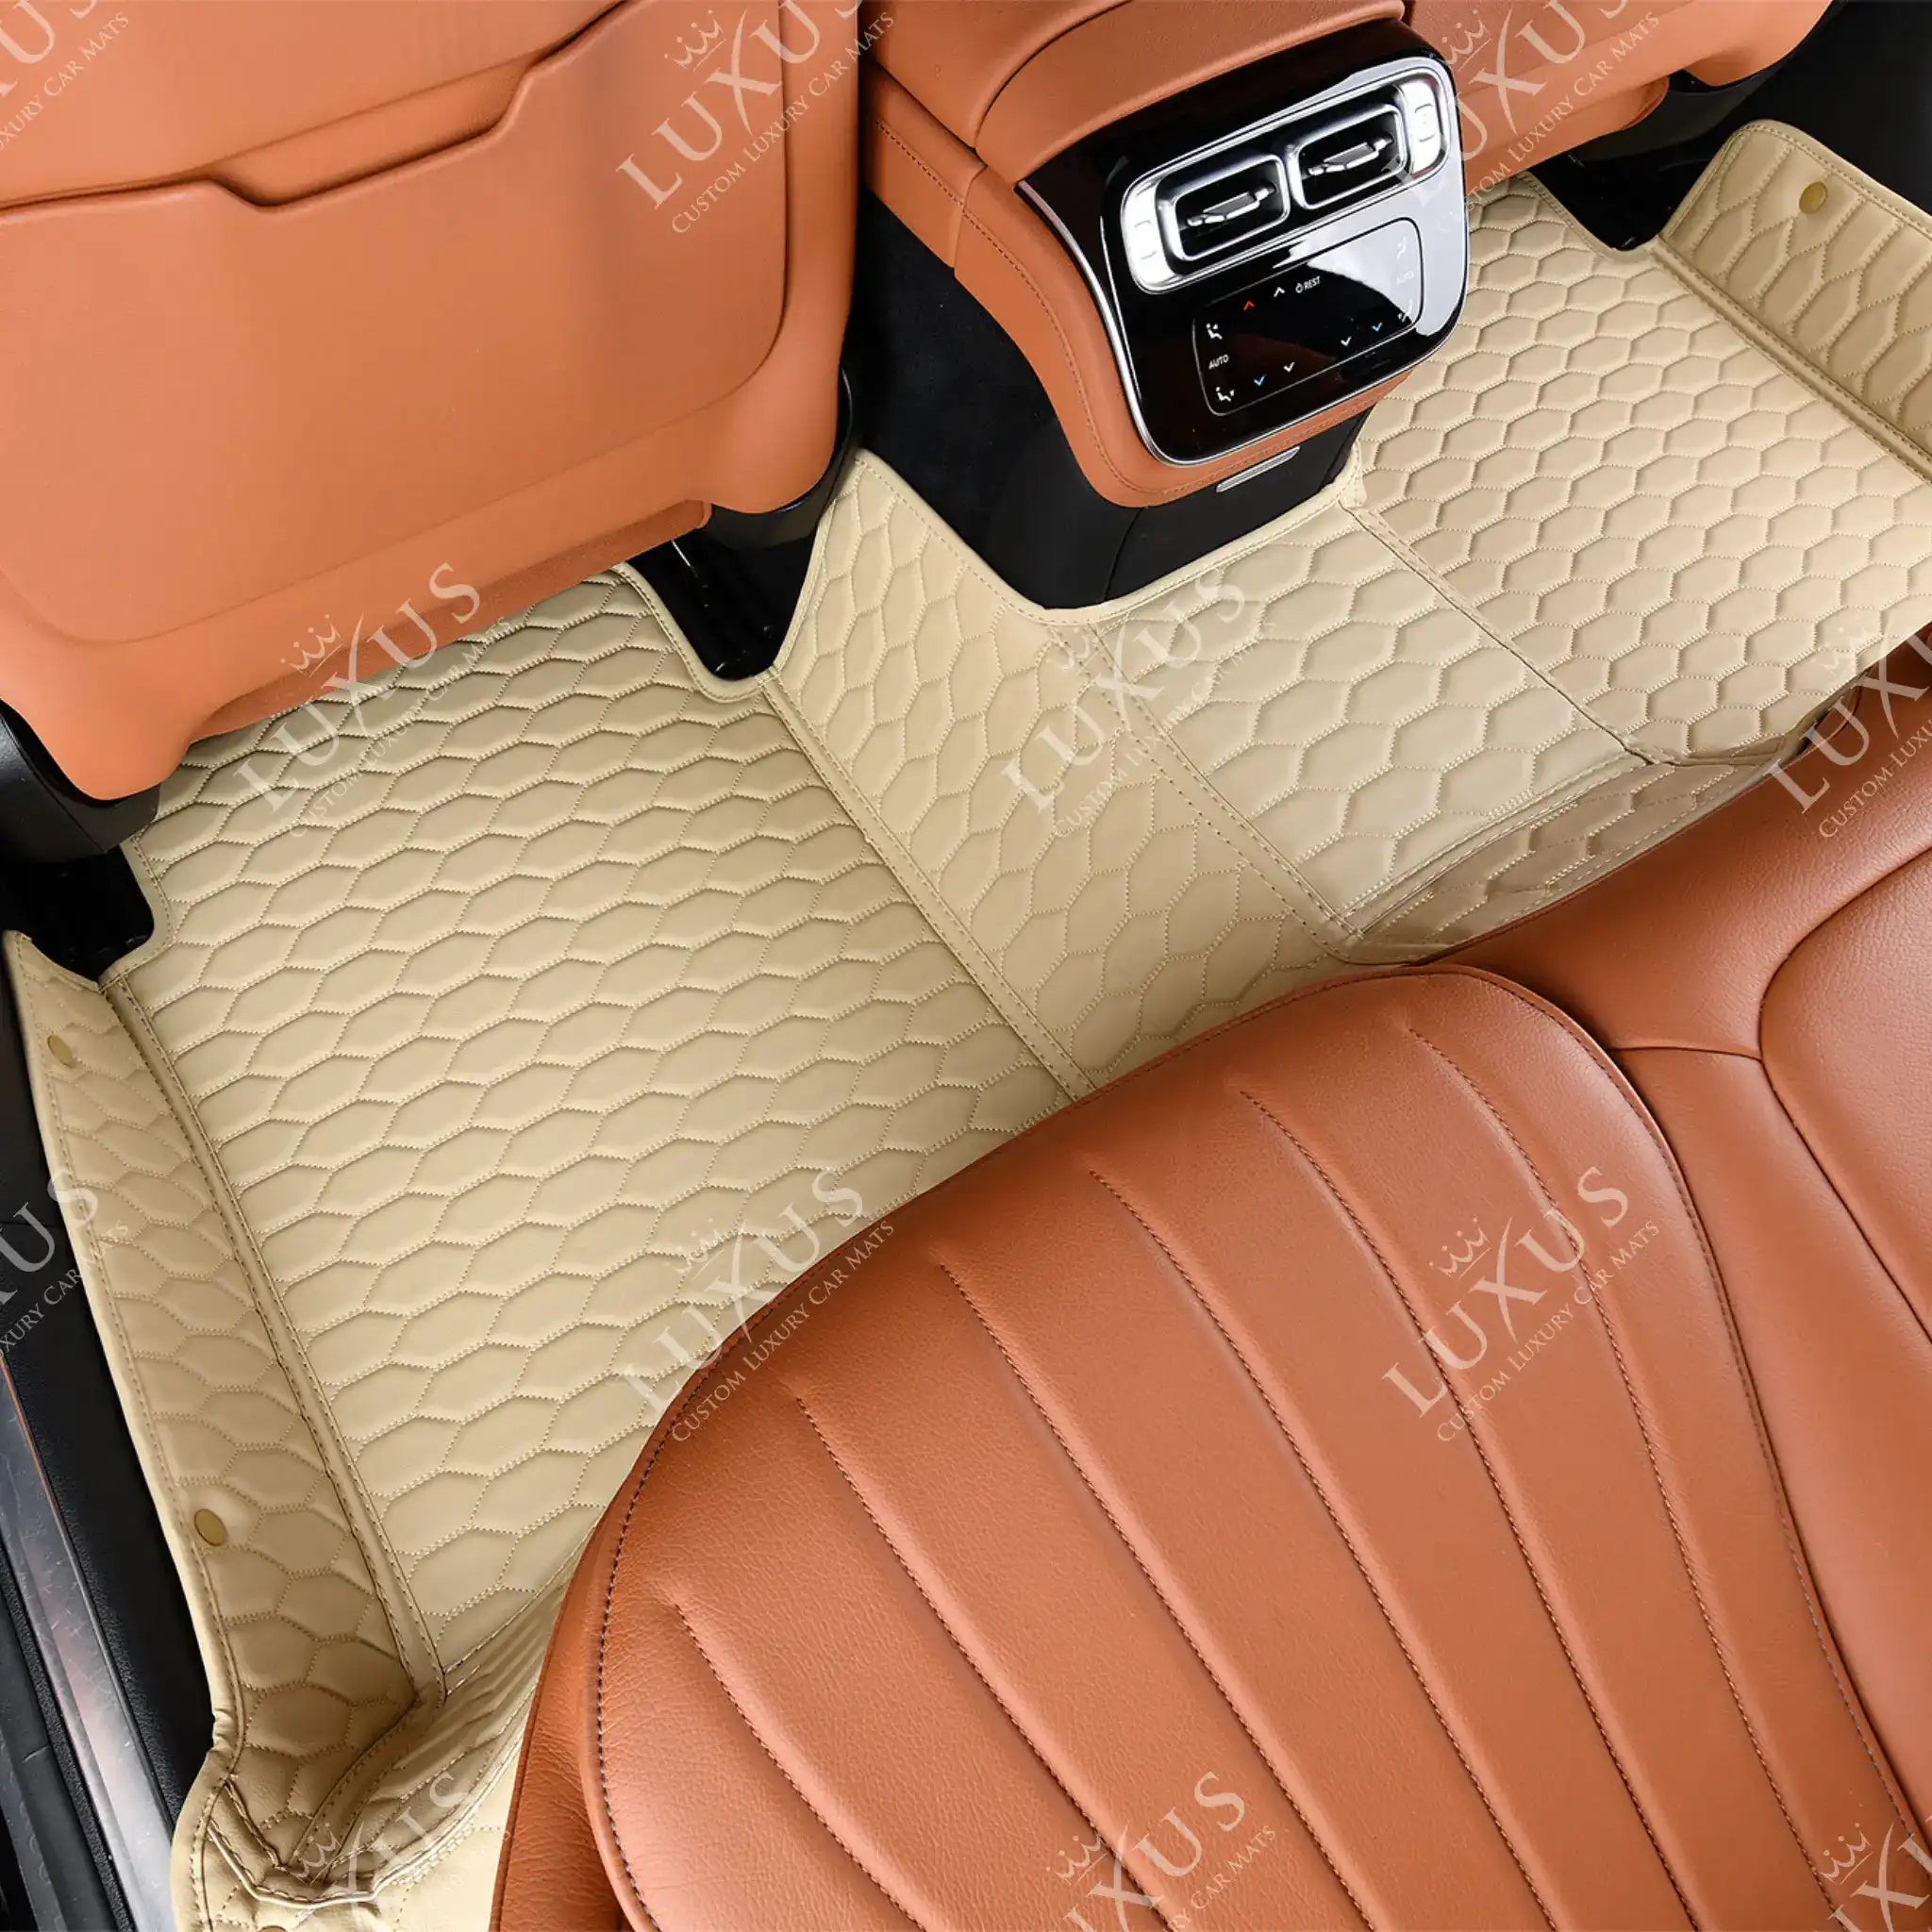 NEW Cream Beige Honeycomb Luxury Car Mats Set